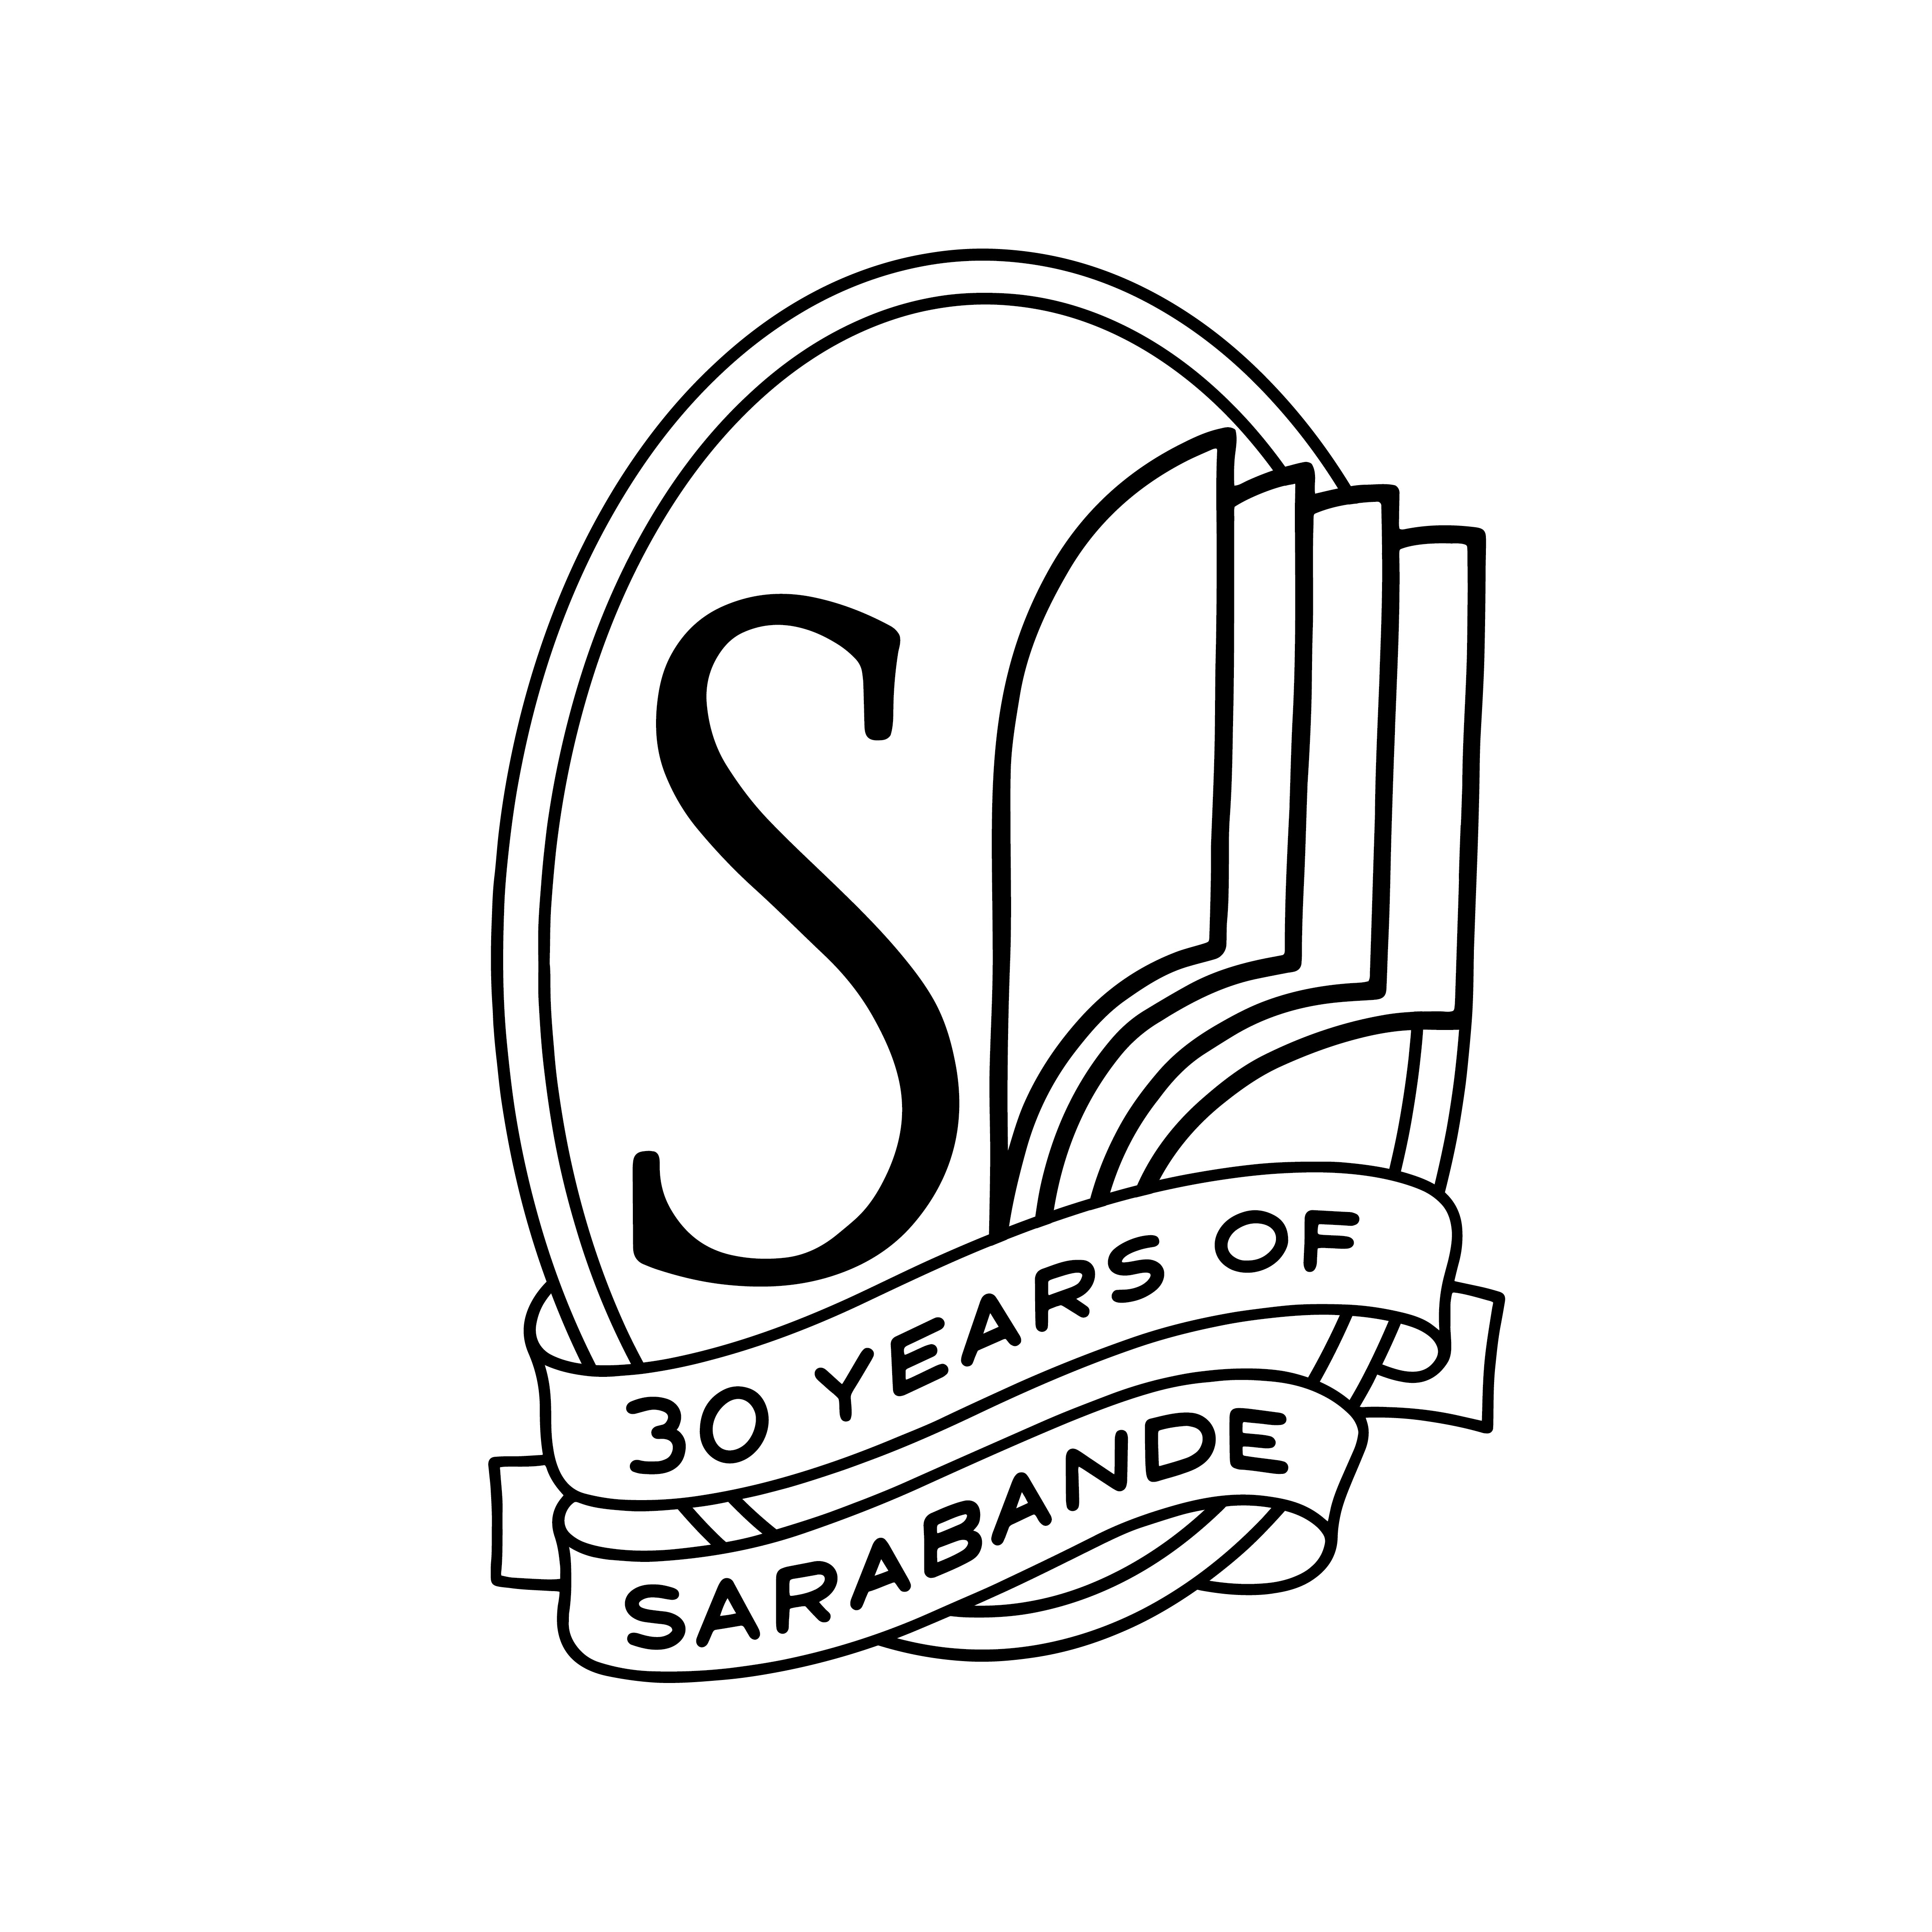 Sb logo 30 years 48